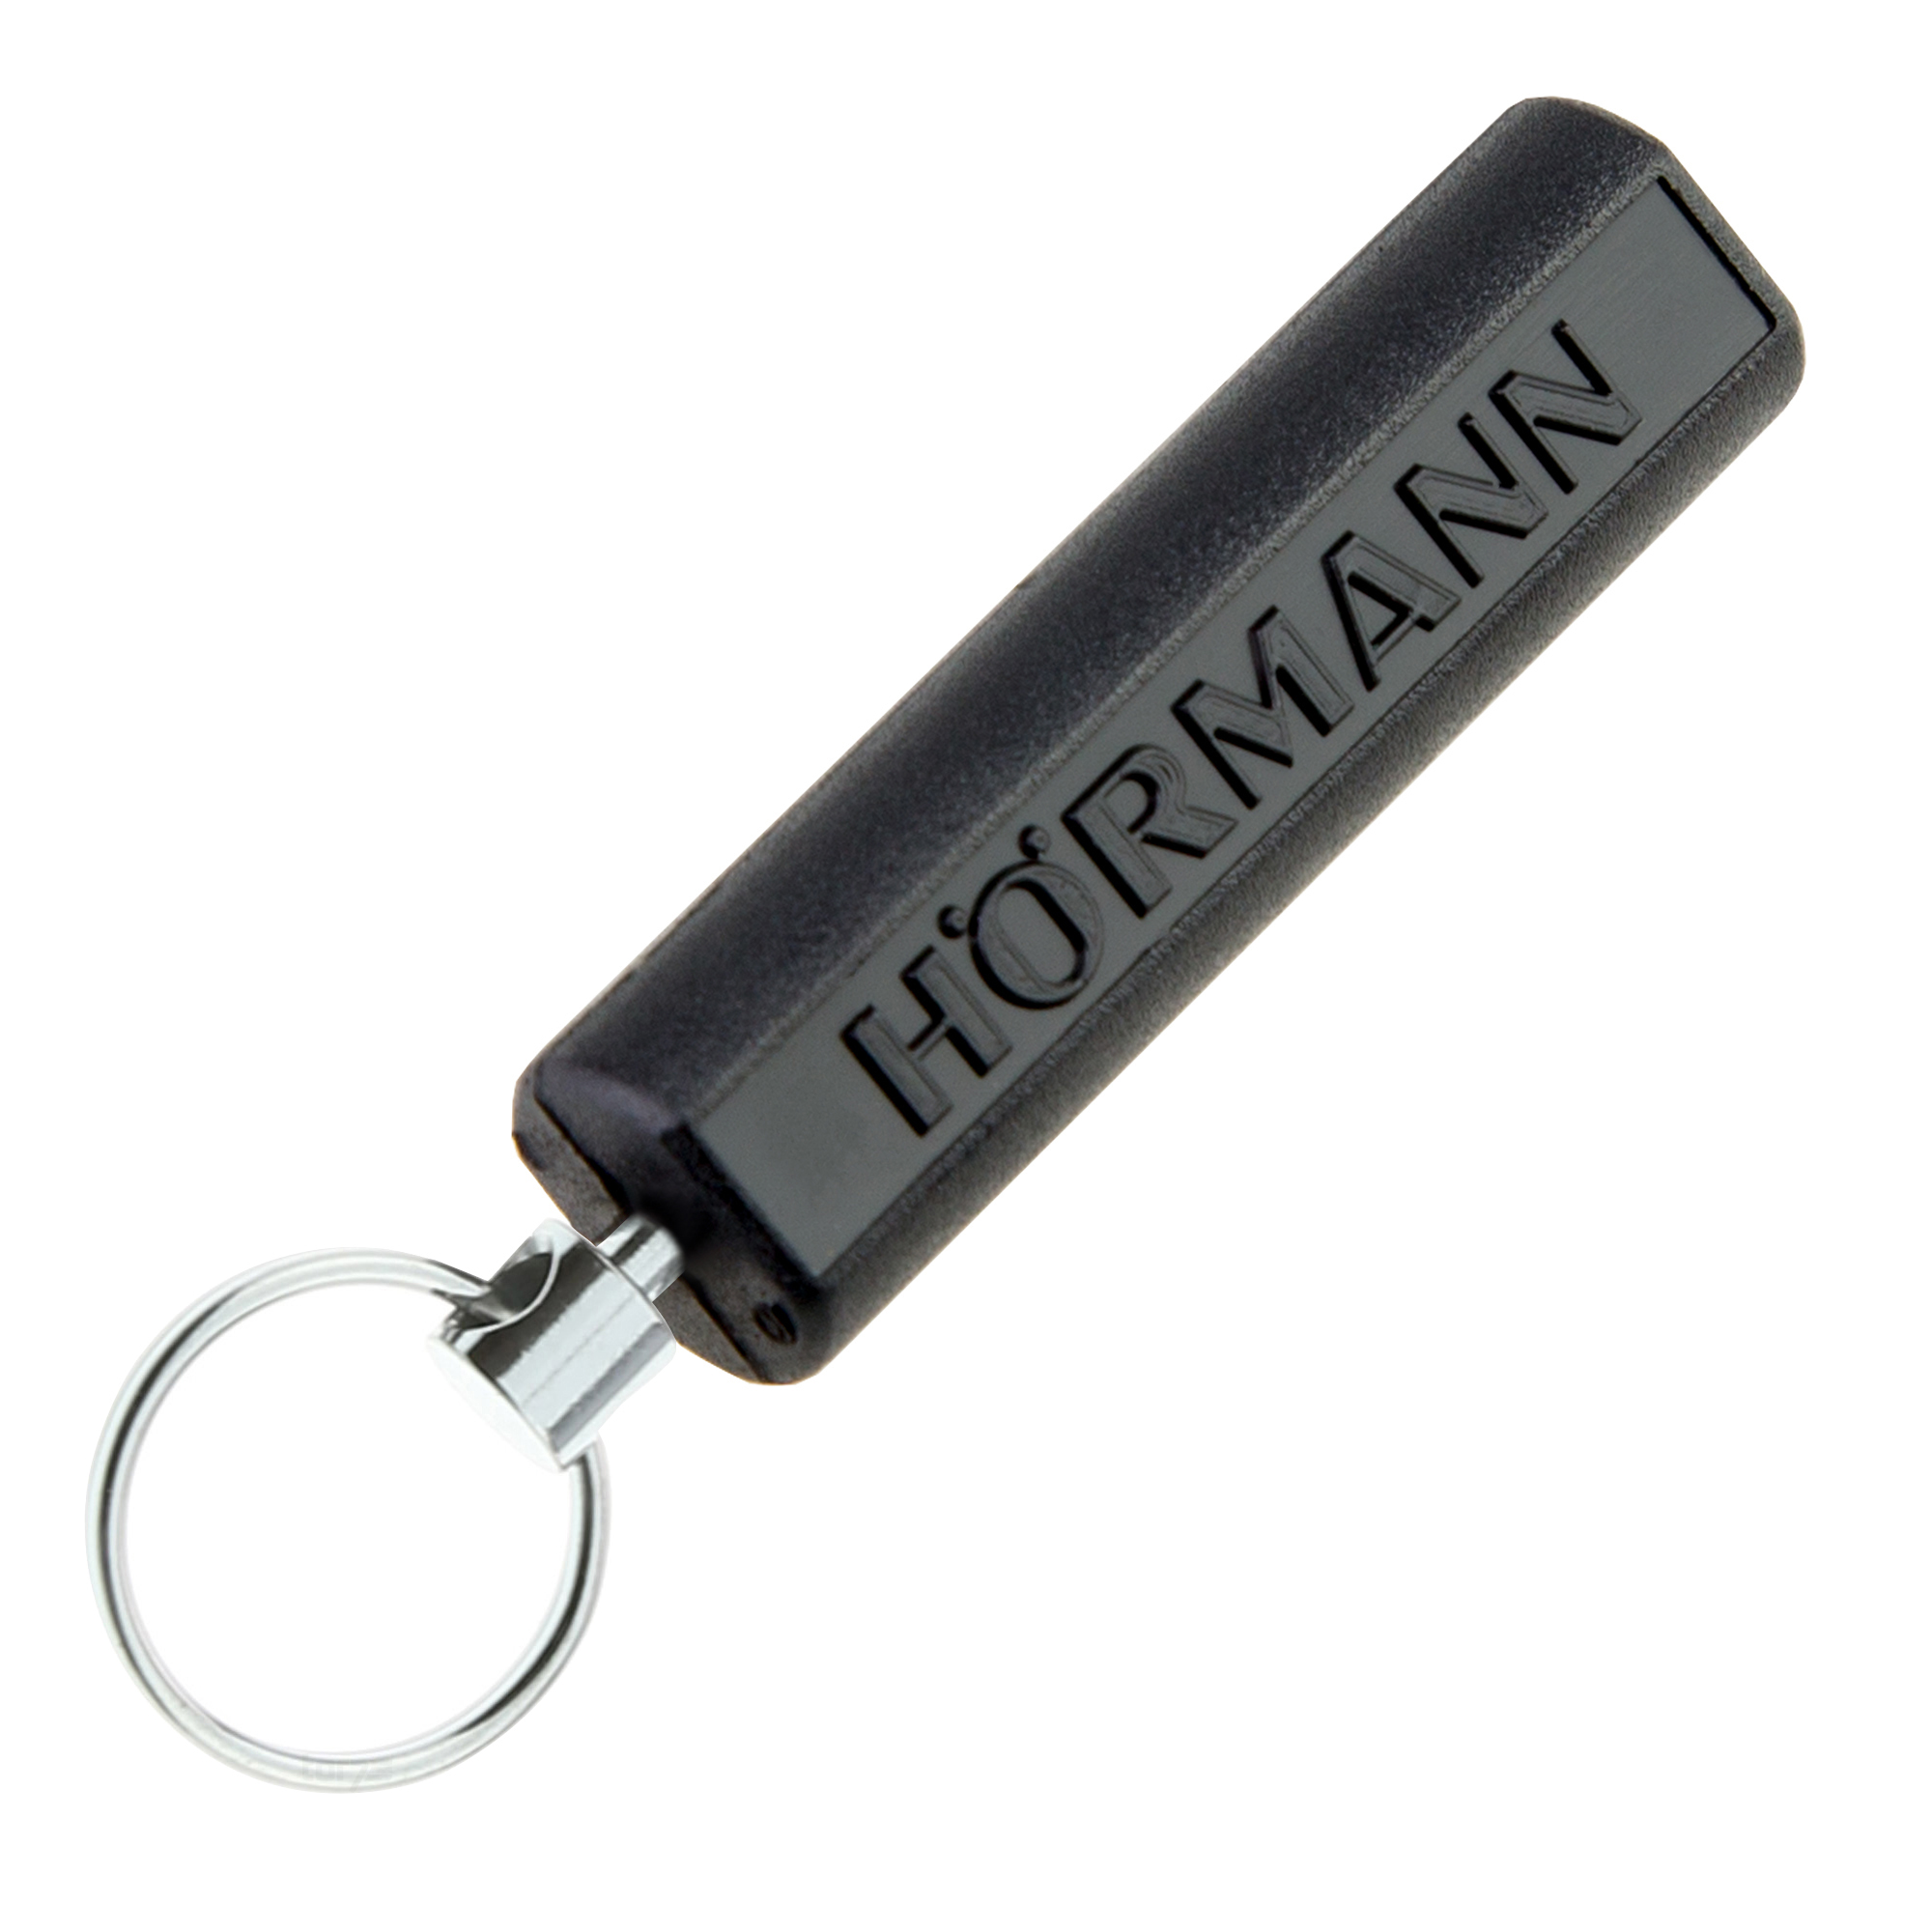 Ts keys. Кодовый замок Херман. Электронный ключ Hormann. Hormann ключ для бесконтактного кодового. Hormann ключ для бесконтактного кодового замка.